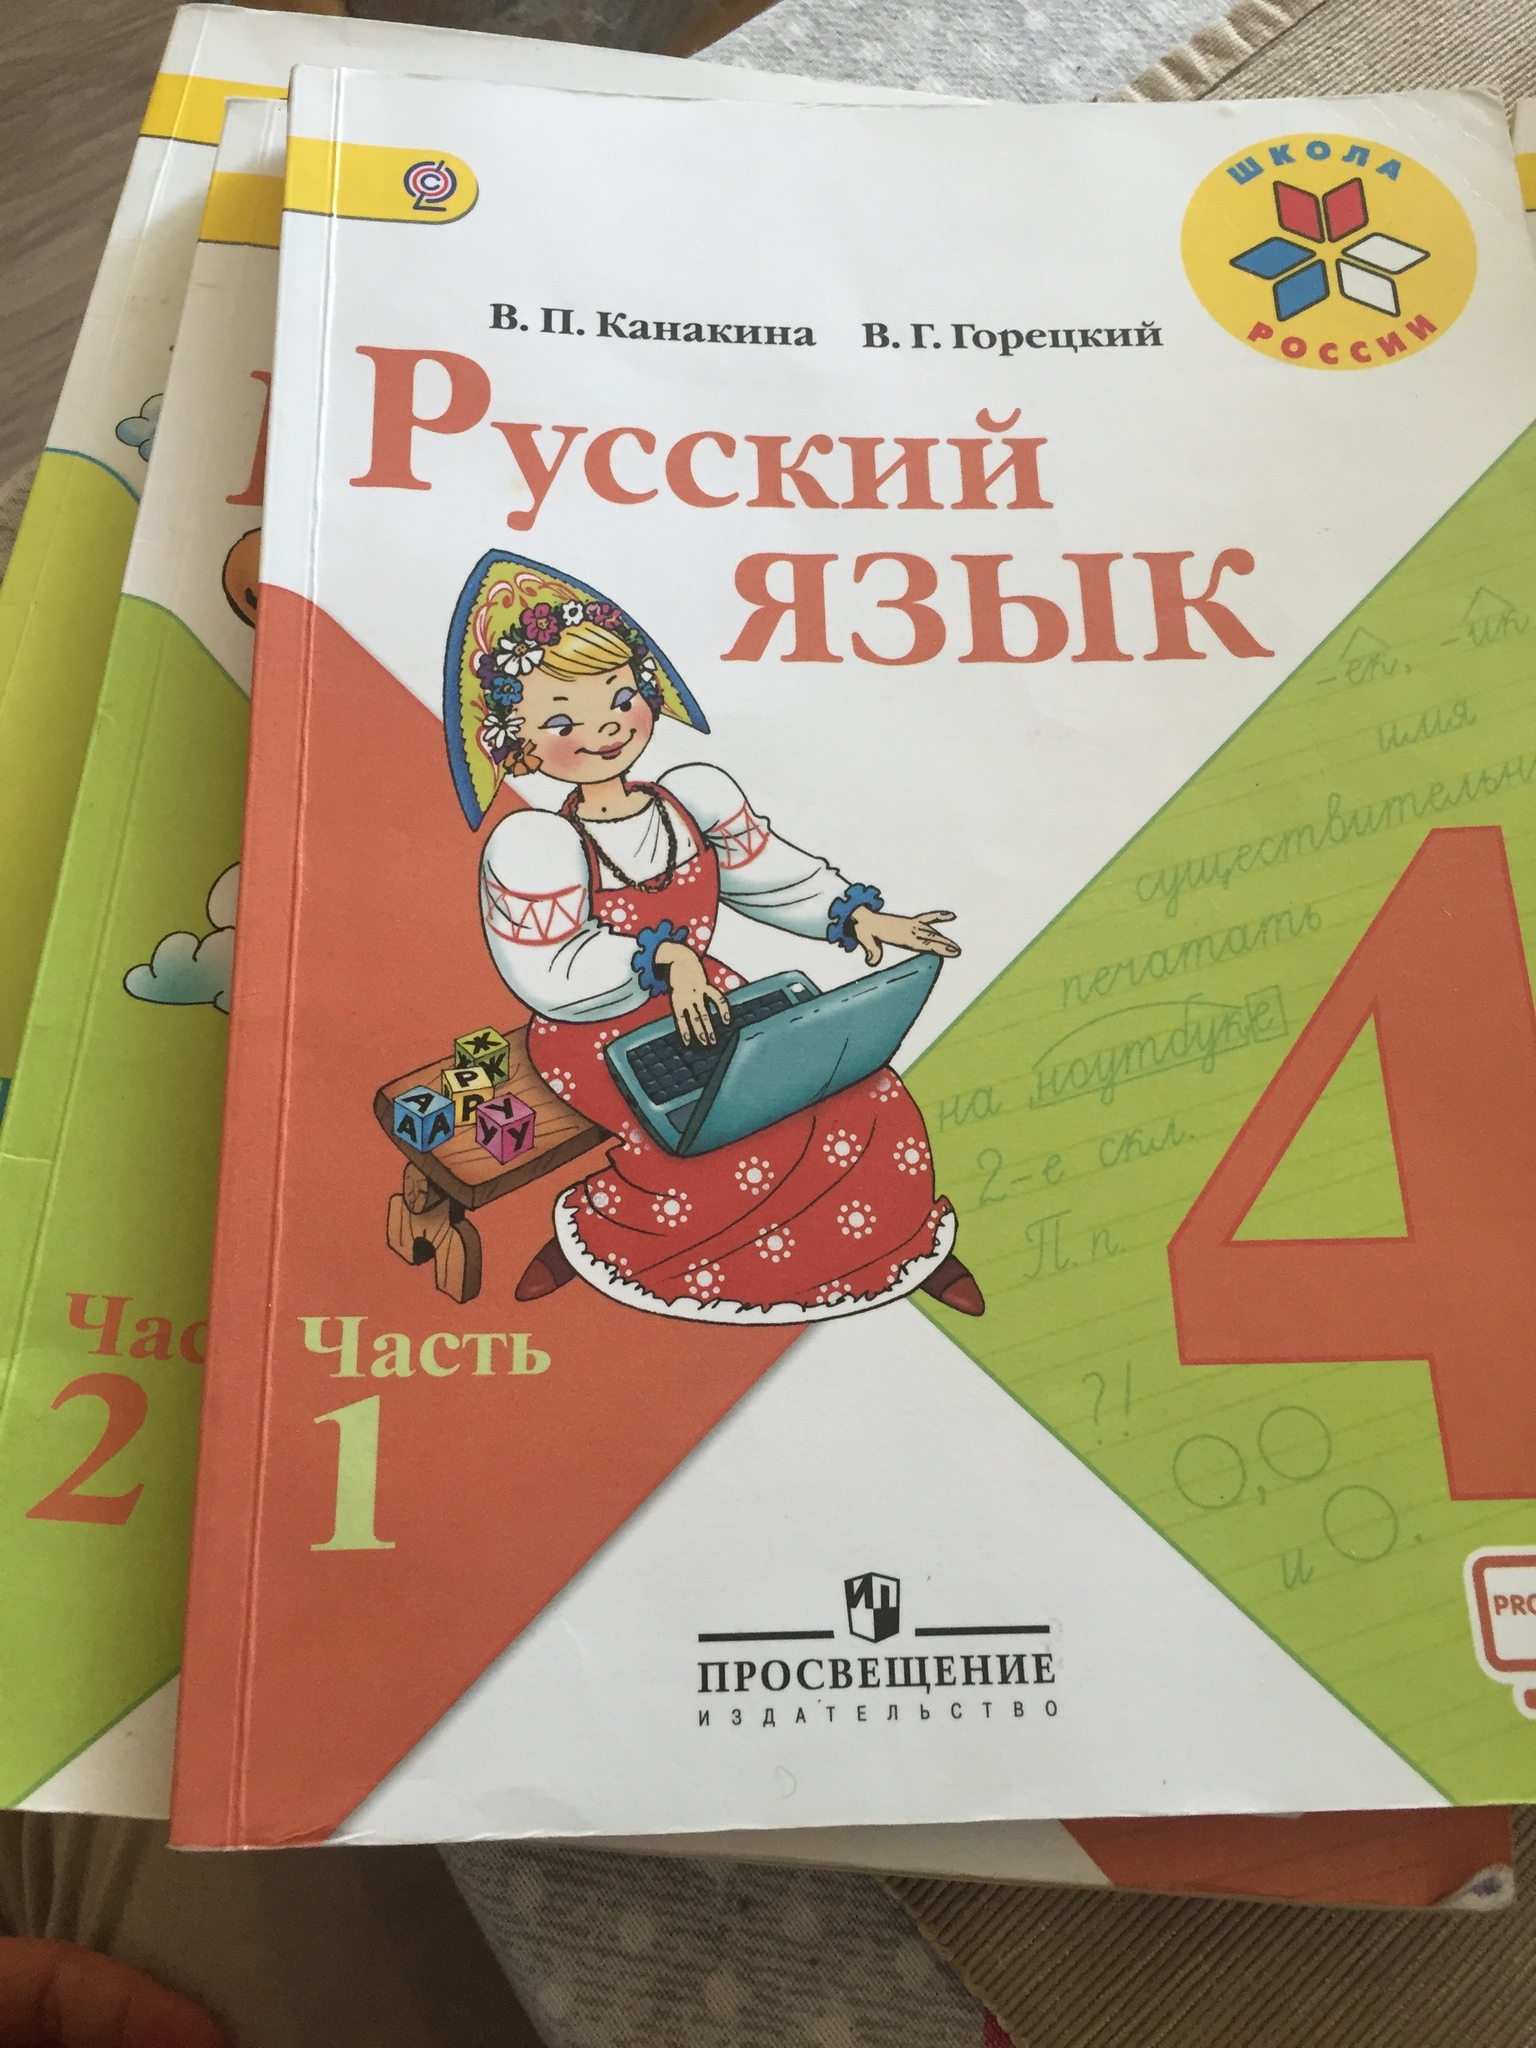 А четыре на русском